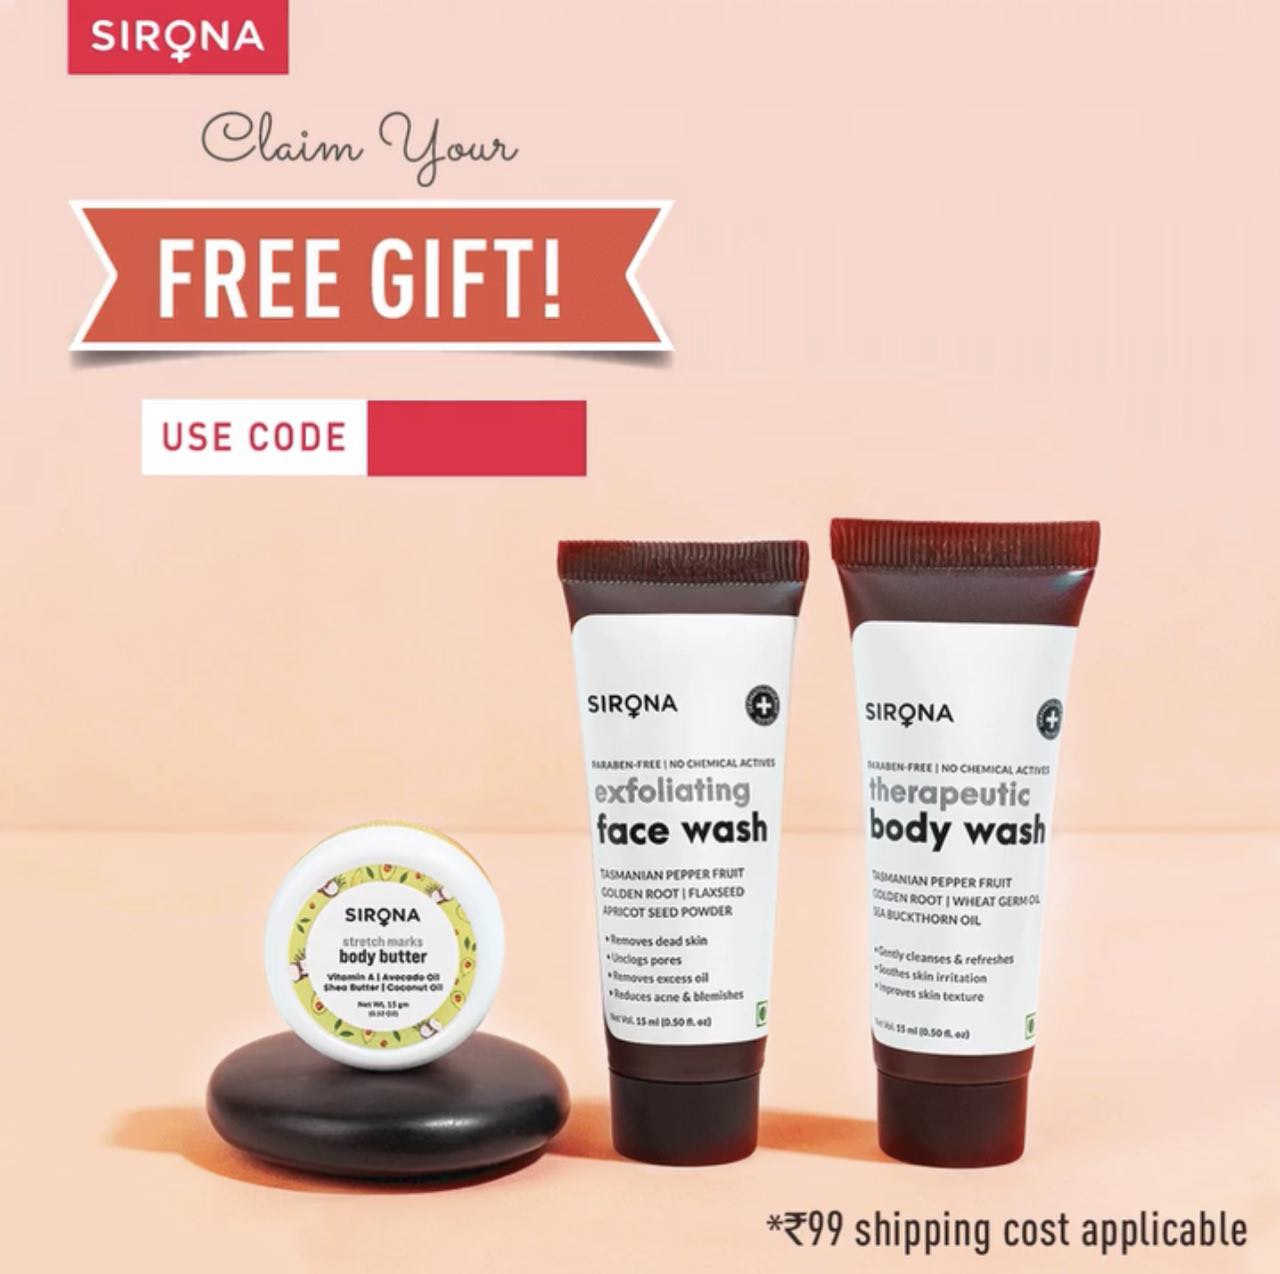 SIRONA Free Products